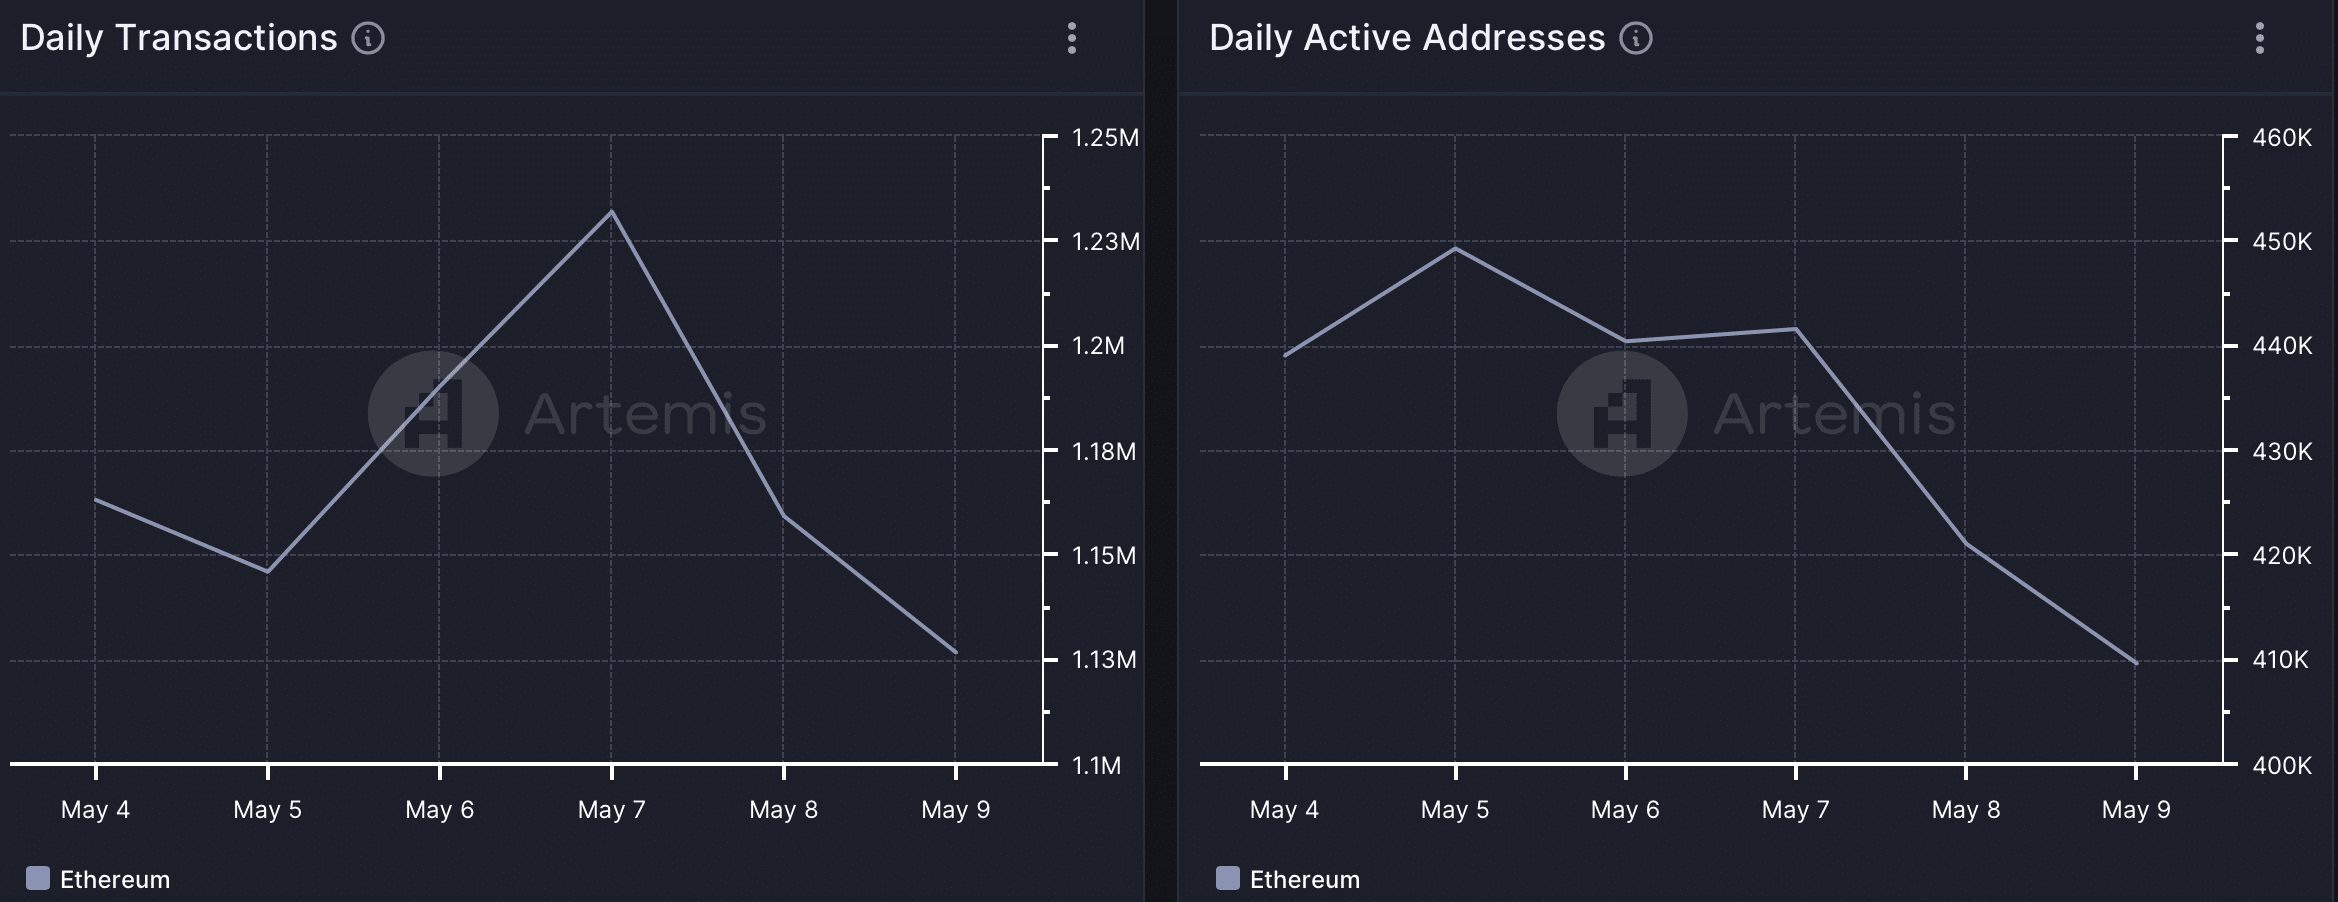 Ethereum's active addresses declined